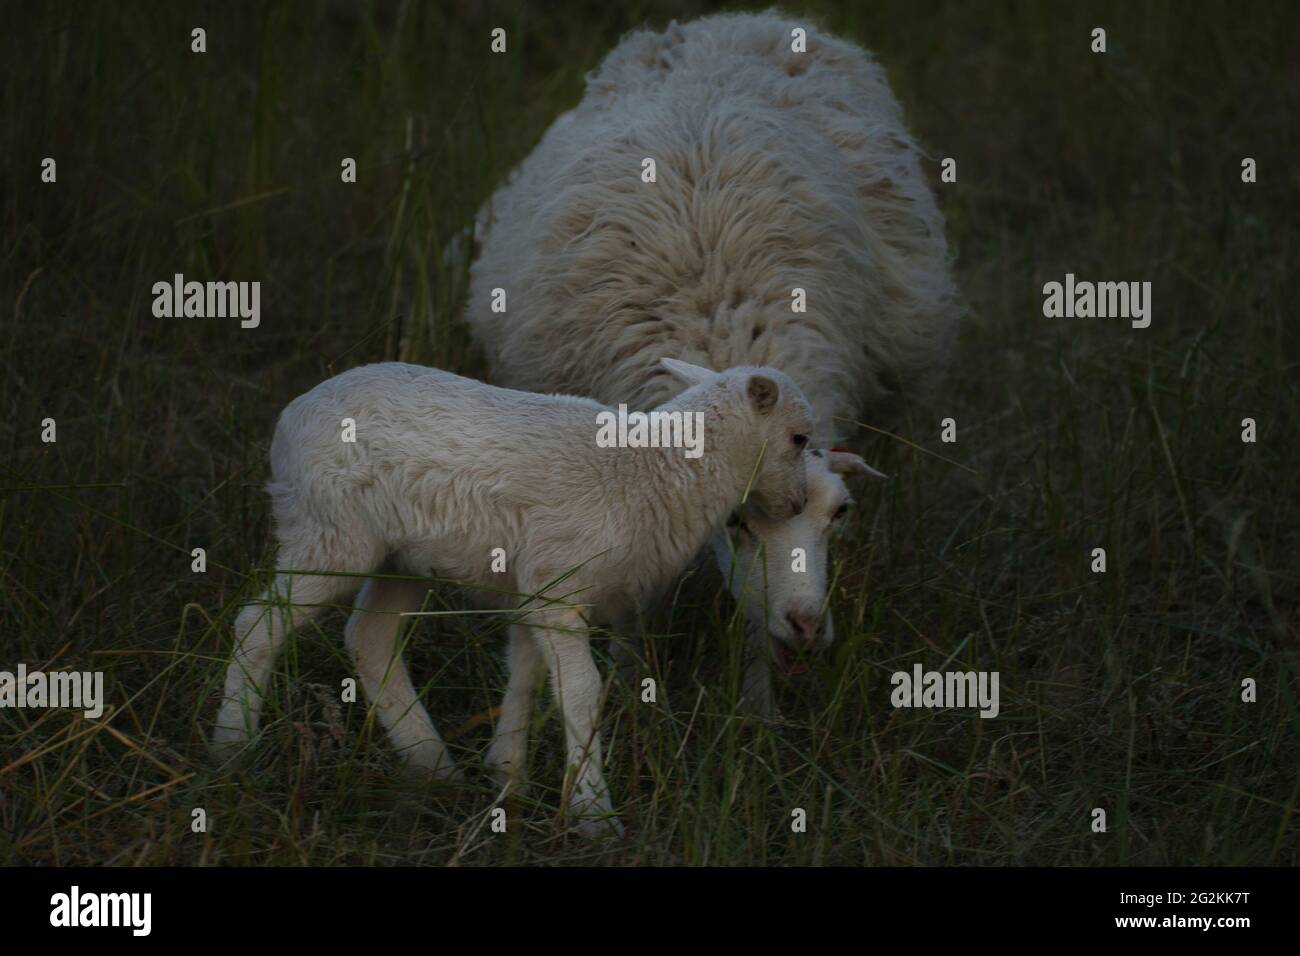 Sheep and lamp Stock Photo